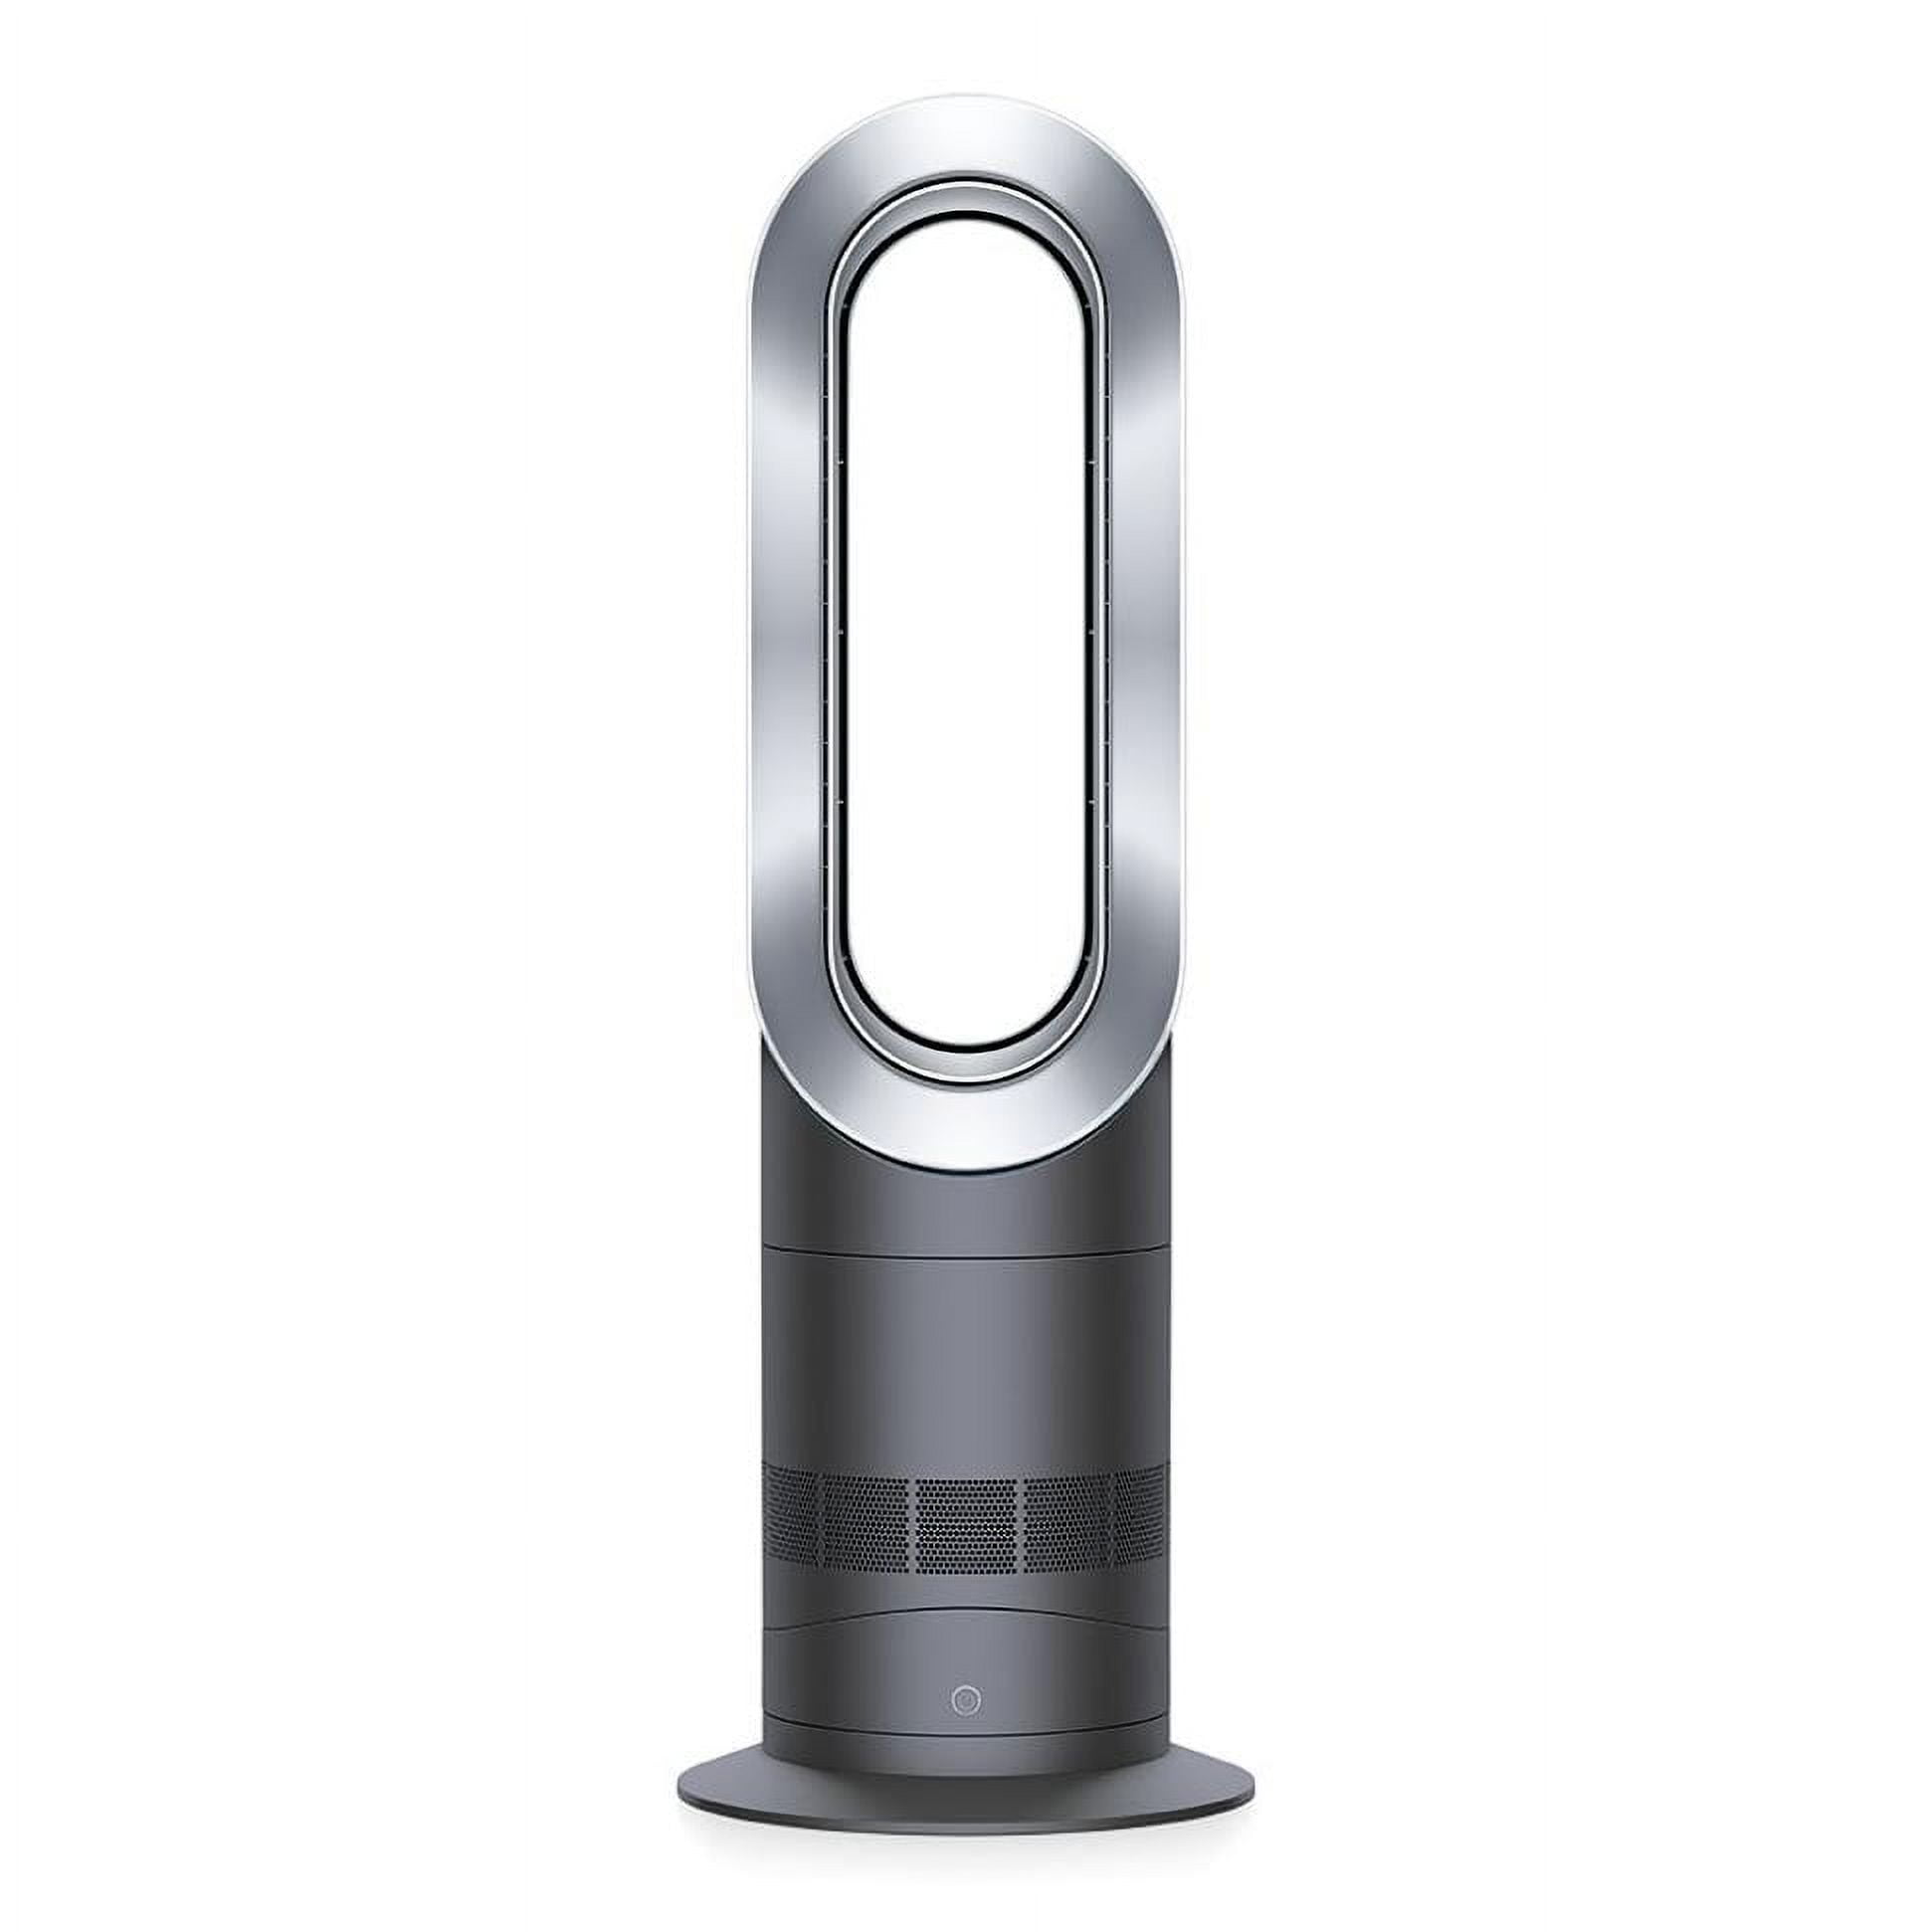 Dyson AM09 Hot + Cool Fan Heater | Iron/Silver | Refurbished